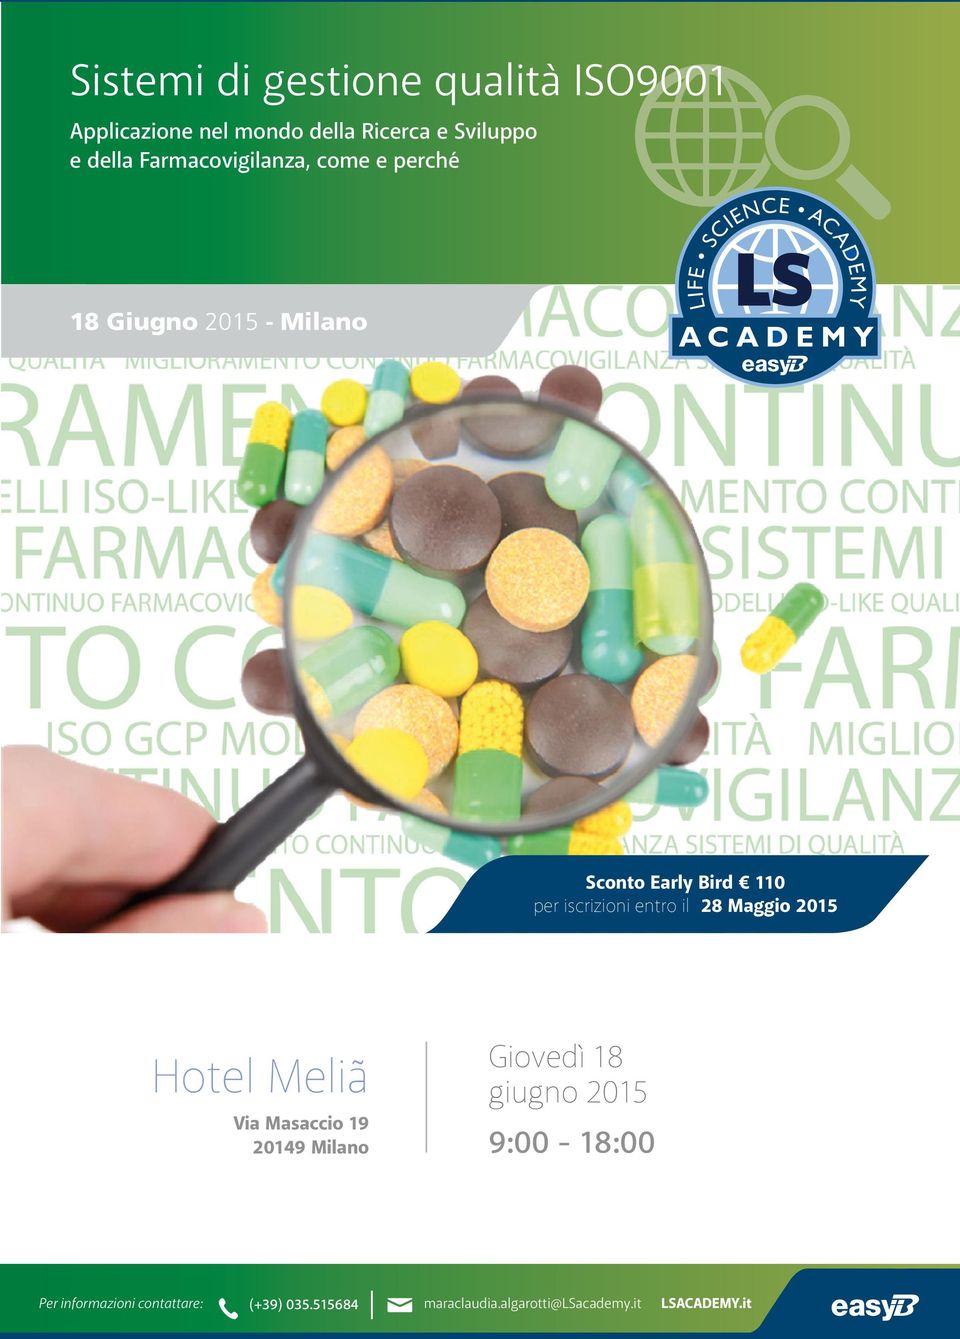 Hotel Meliã Via Masaccio 19 20149 Milano Giovedì 18 giugno 2015 9:00-18:00